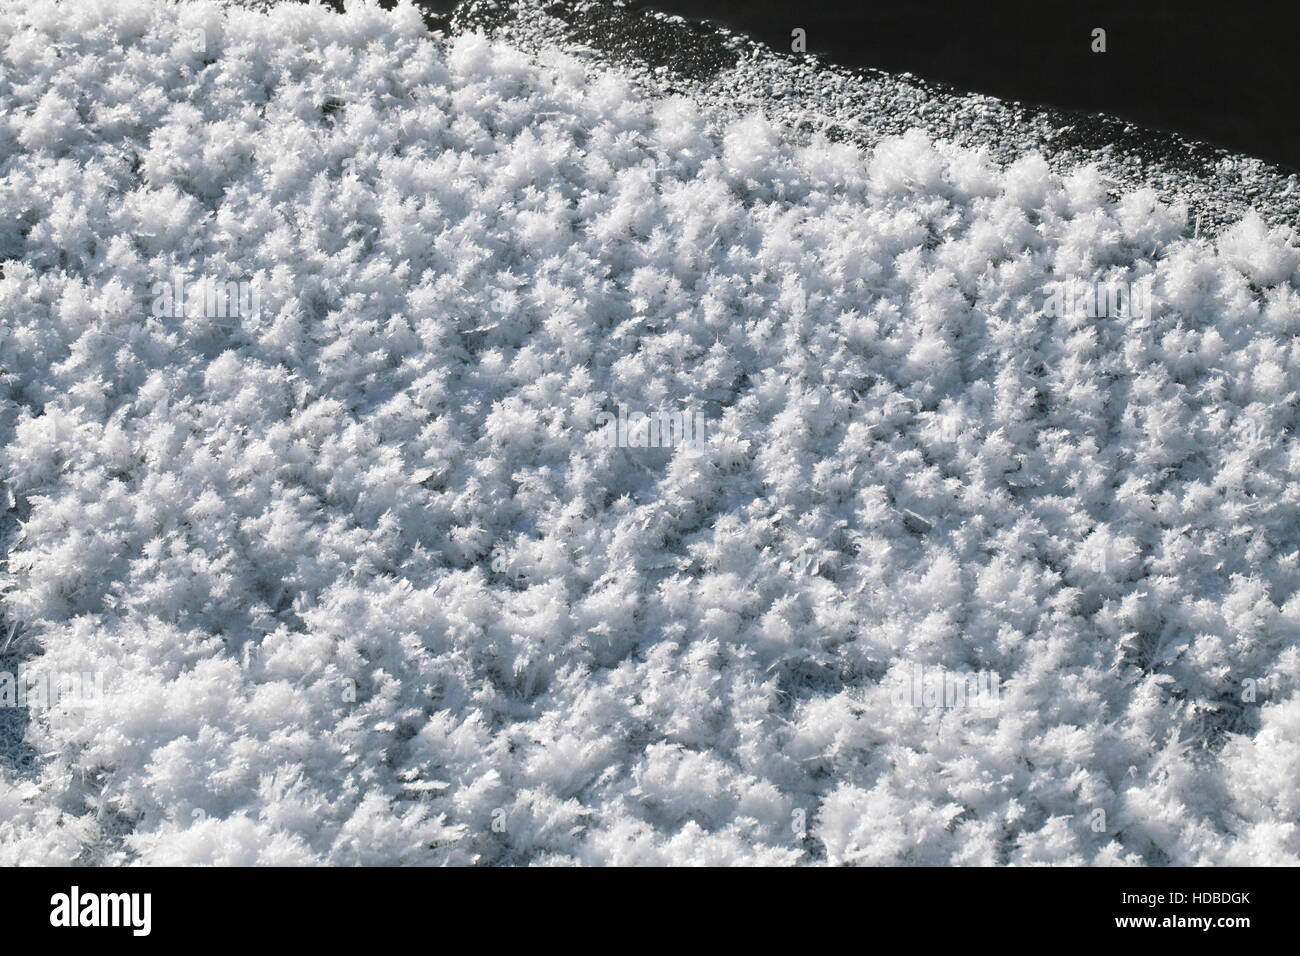 Big snow crystals on the ground, macro shot Stock Photo